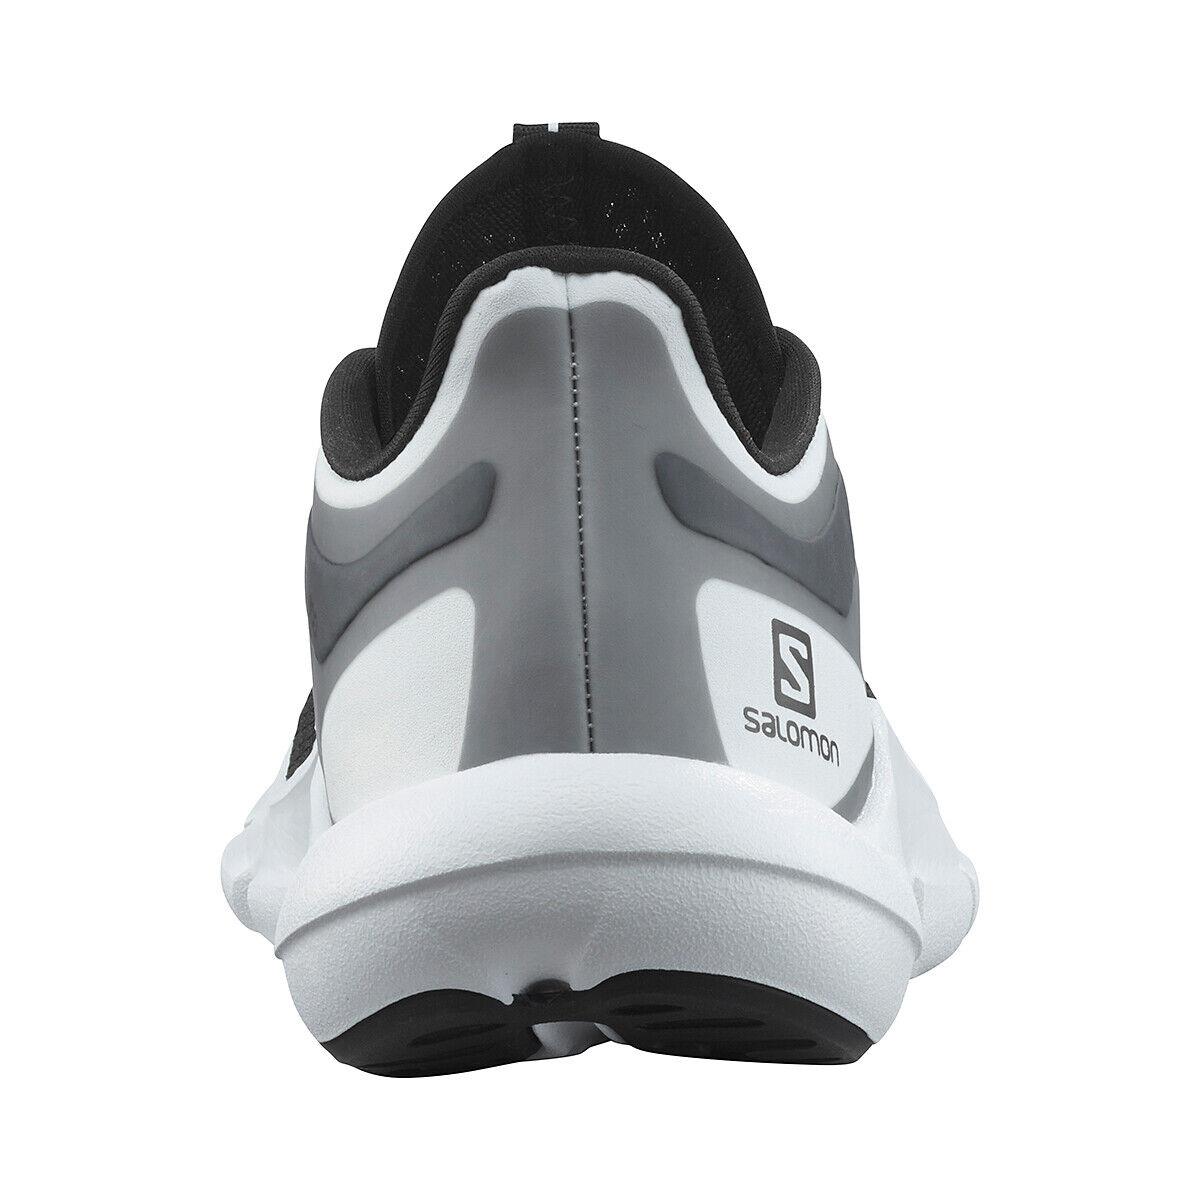 Salomon shoes Predict MOD - Black/White 2